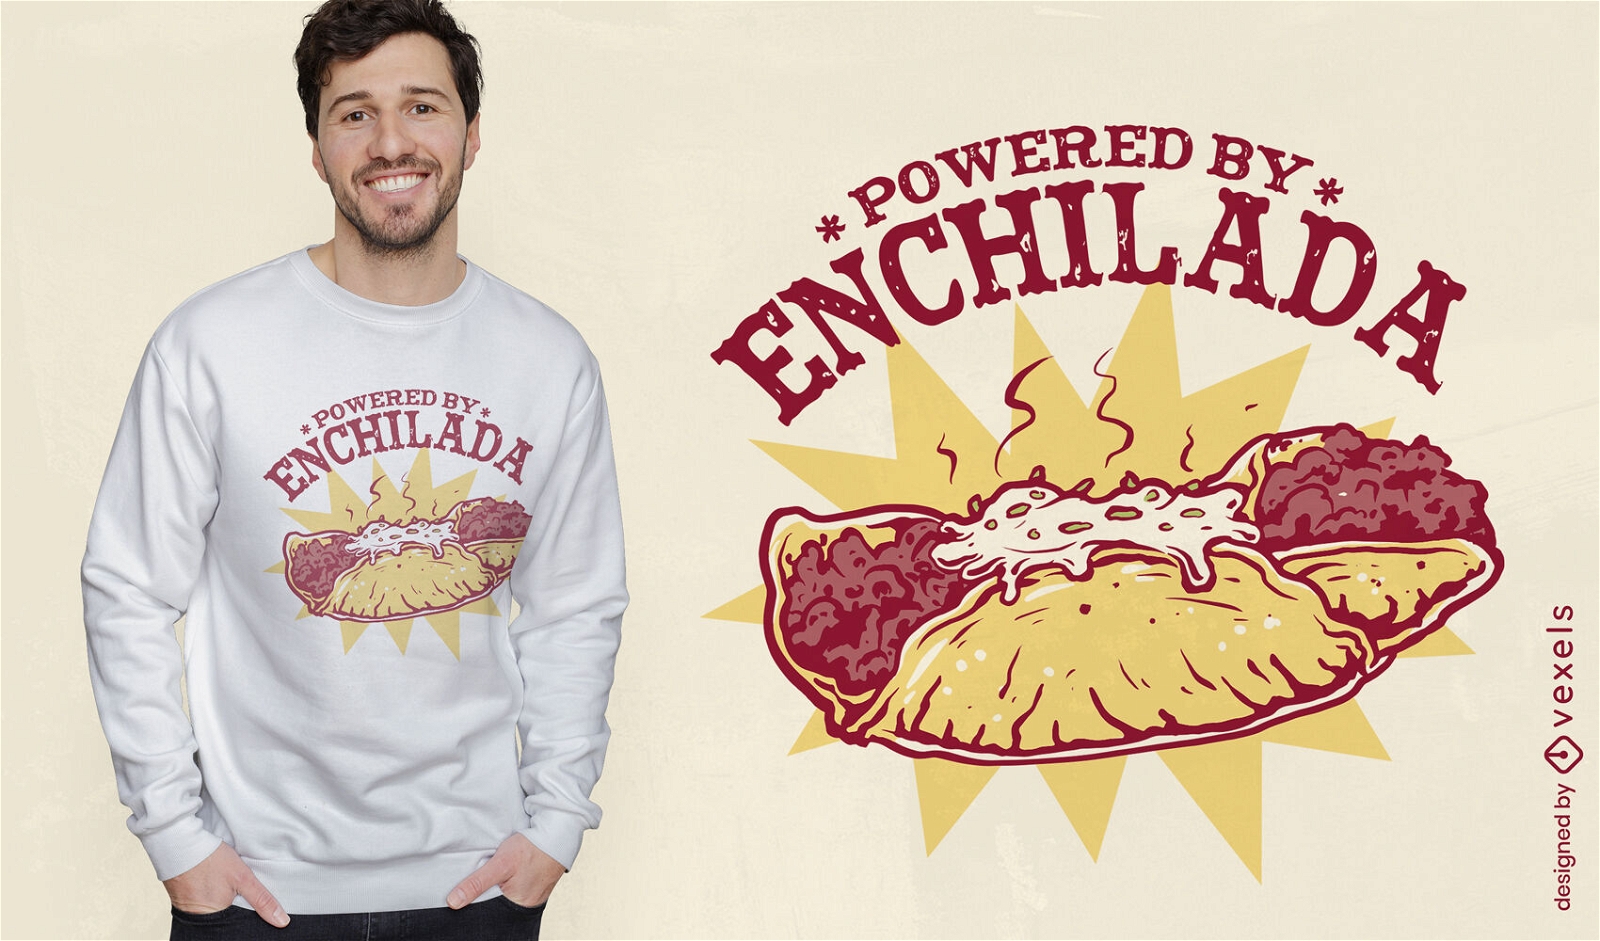 Enchilada mexican food t-shirt design